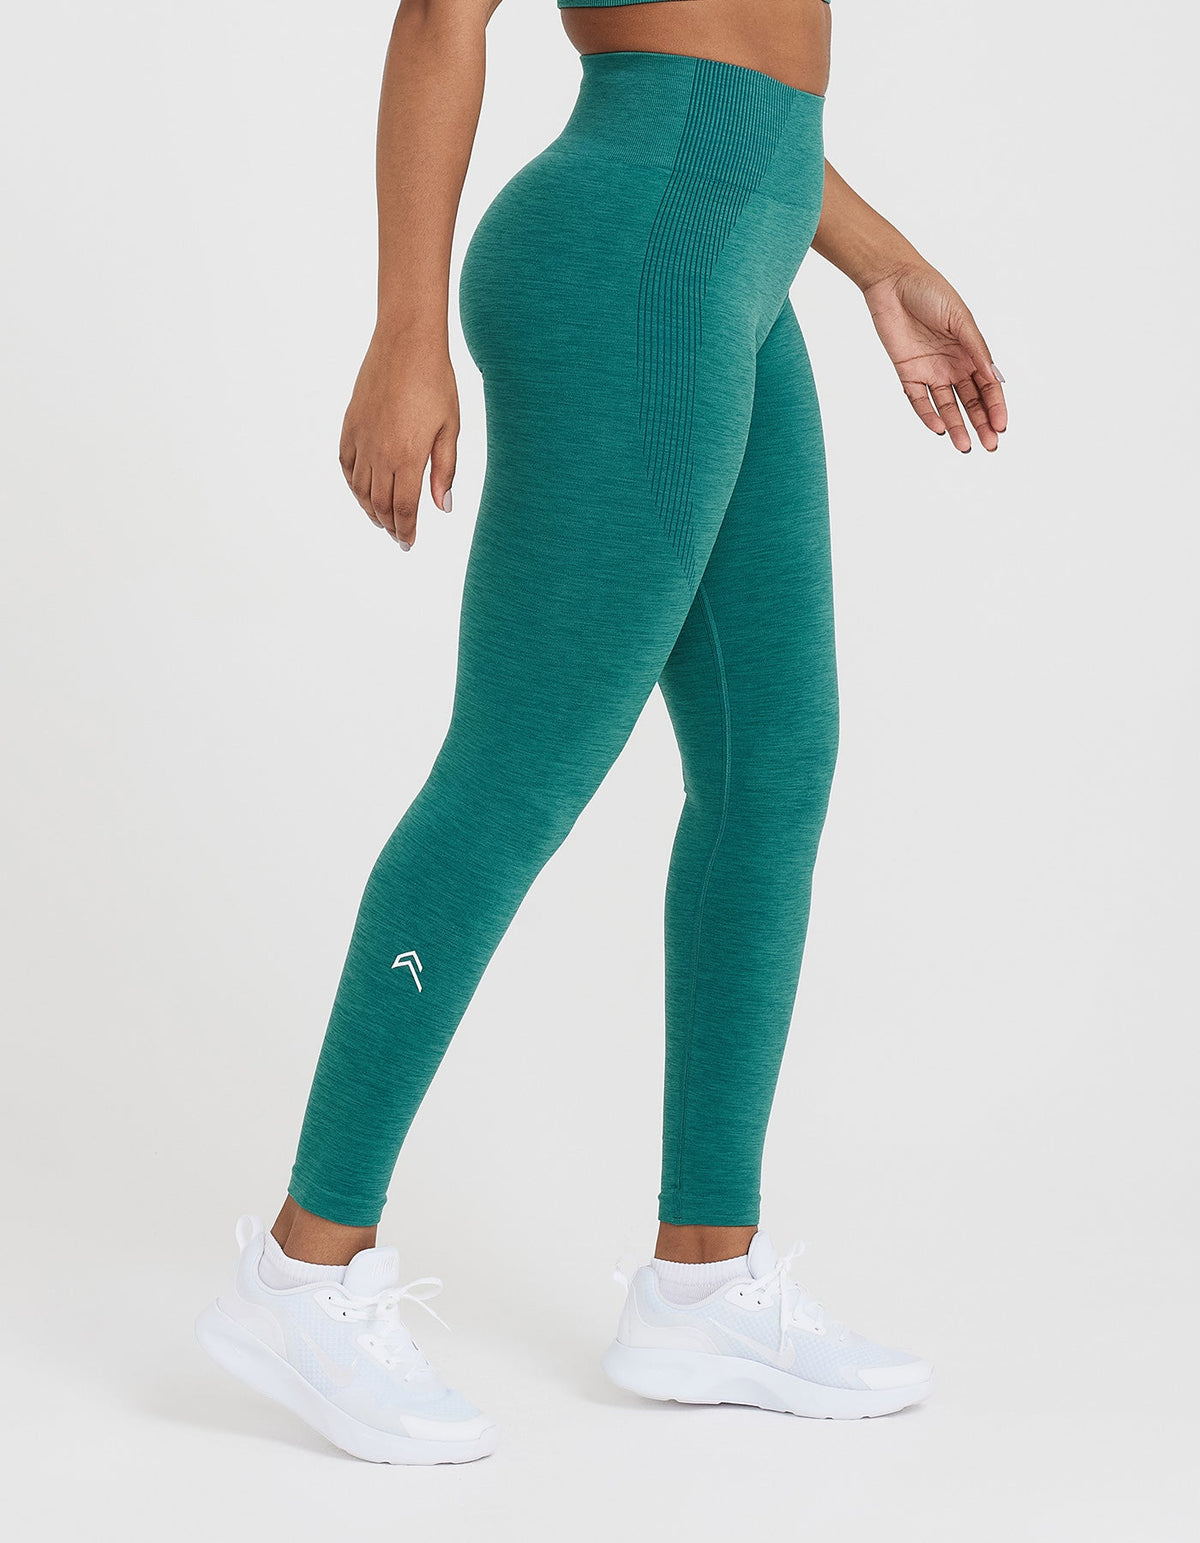 Urban Threads seamless squat proof gym leggings in green marl